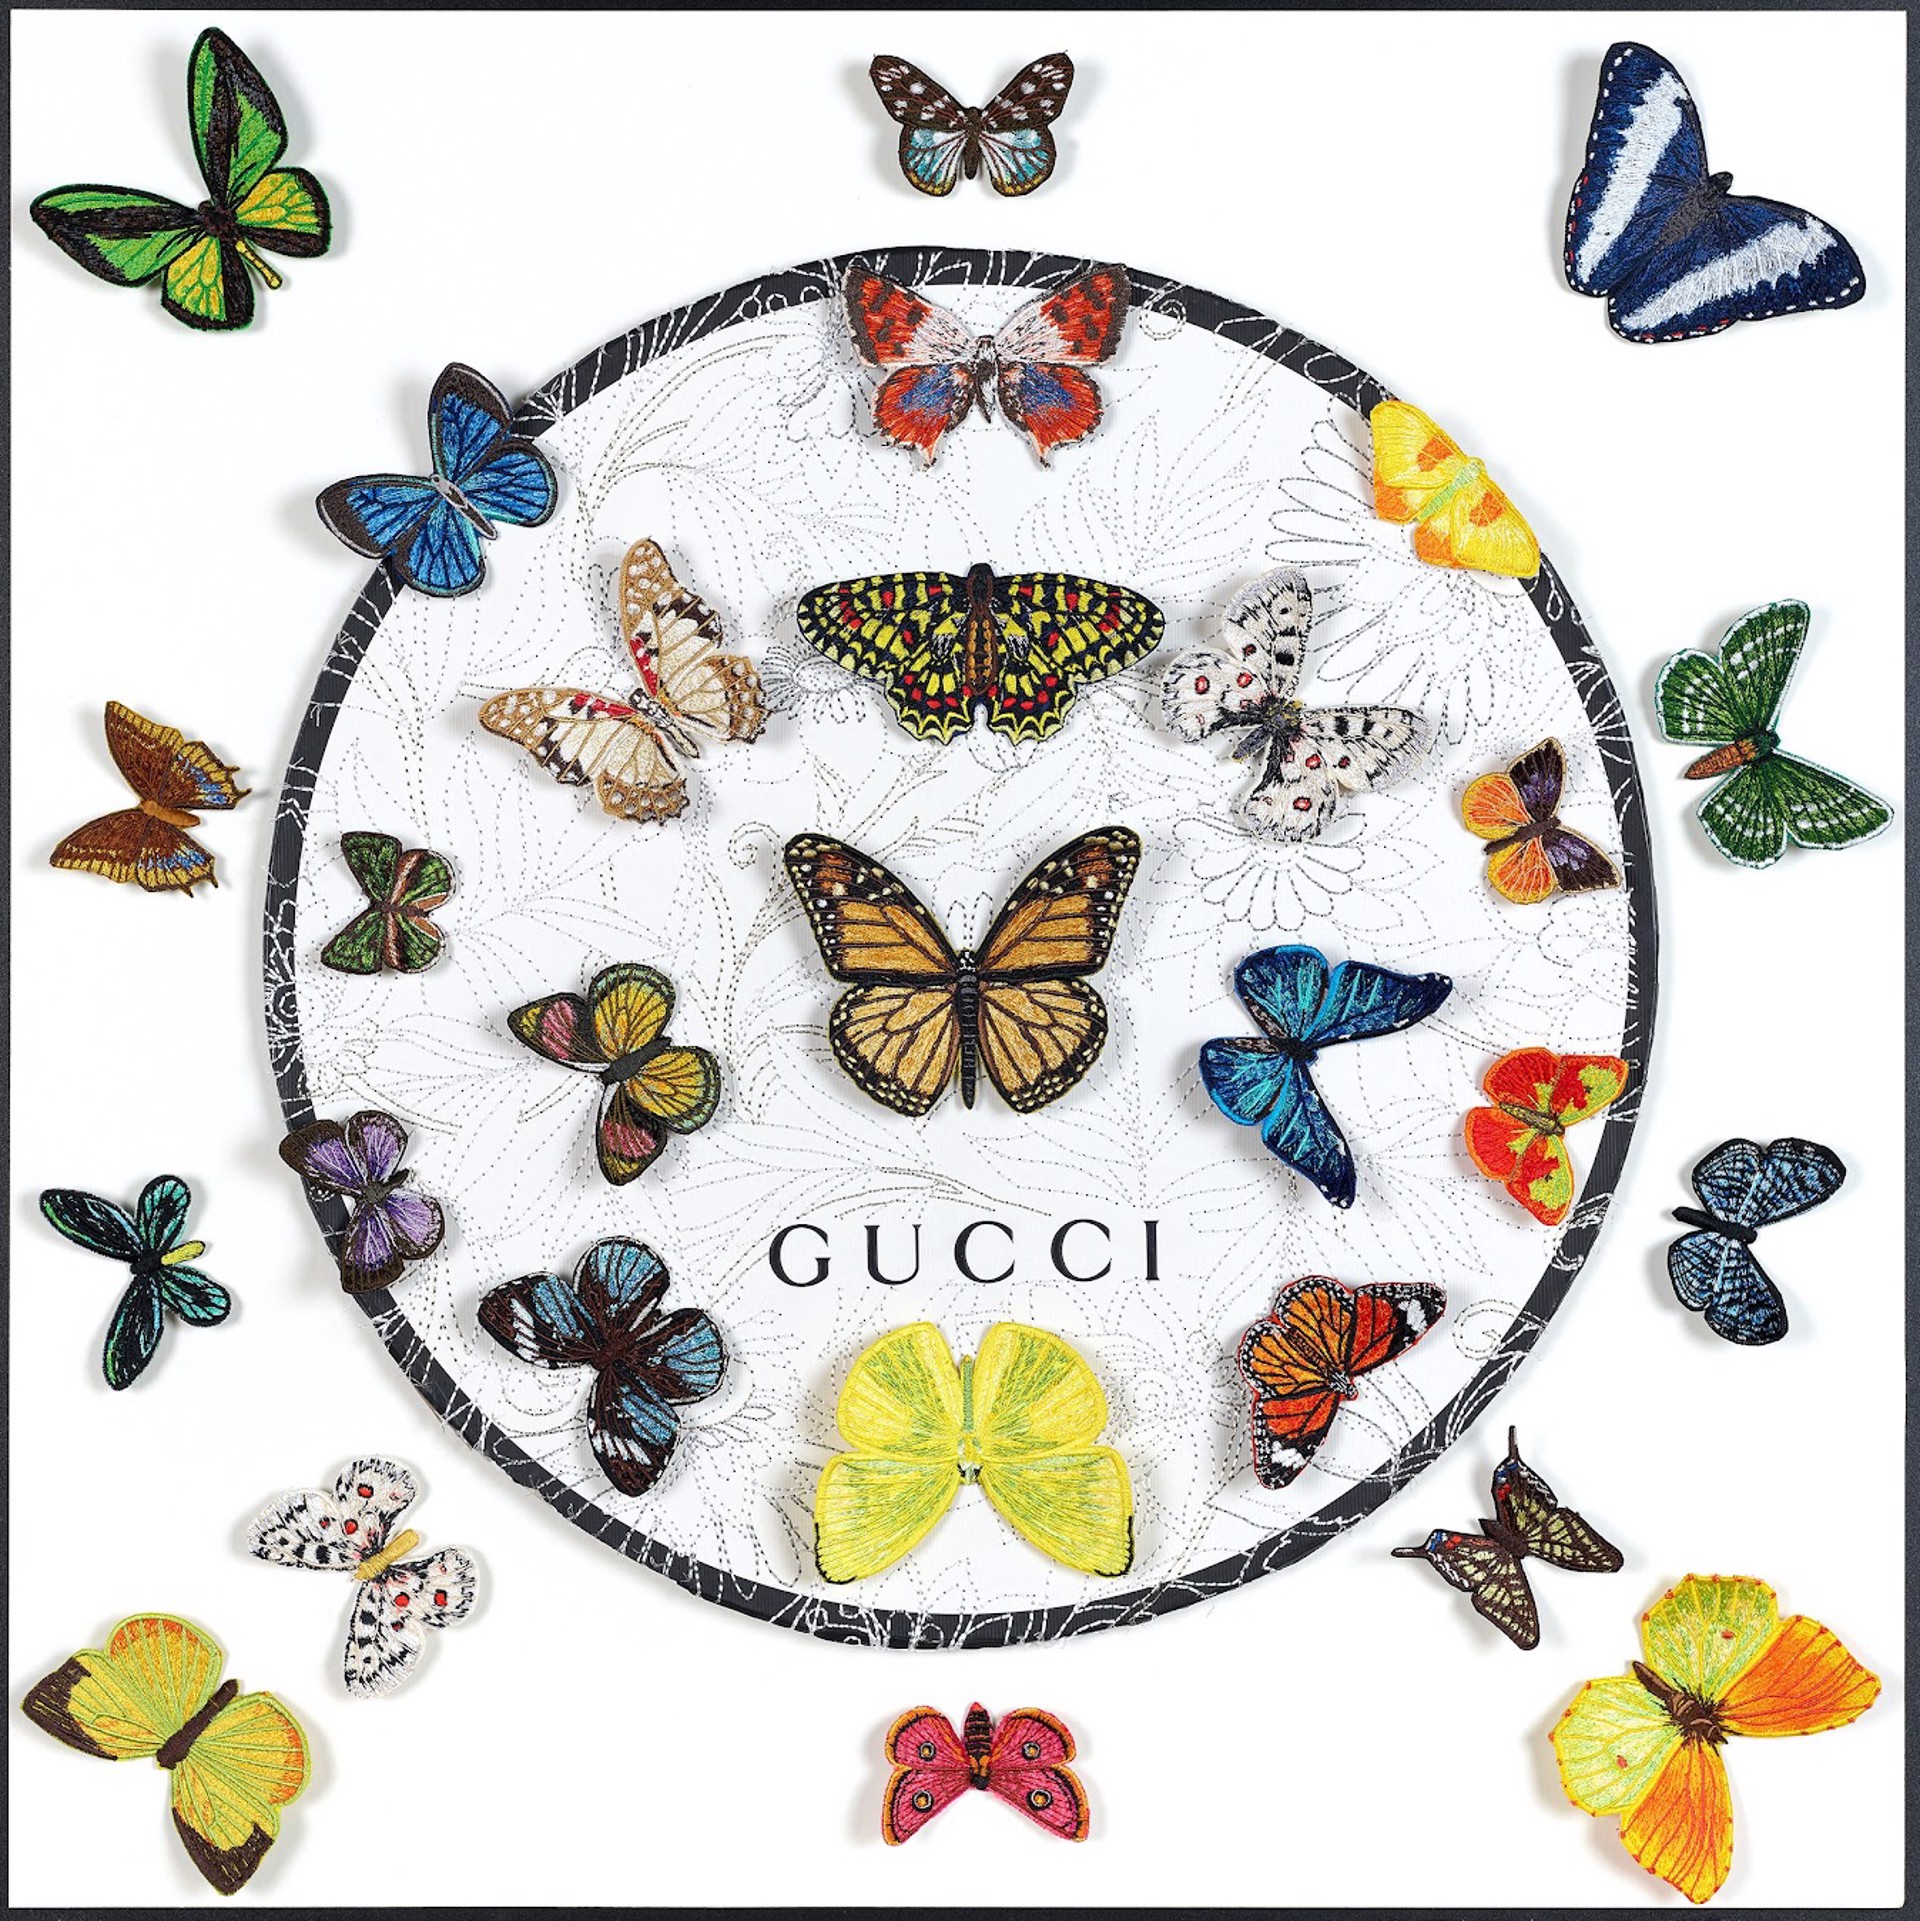 Gucci Butterfly Wheel by Stephen Wilson